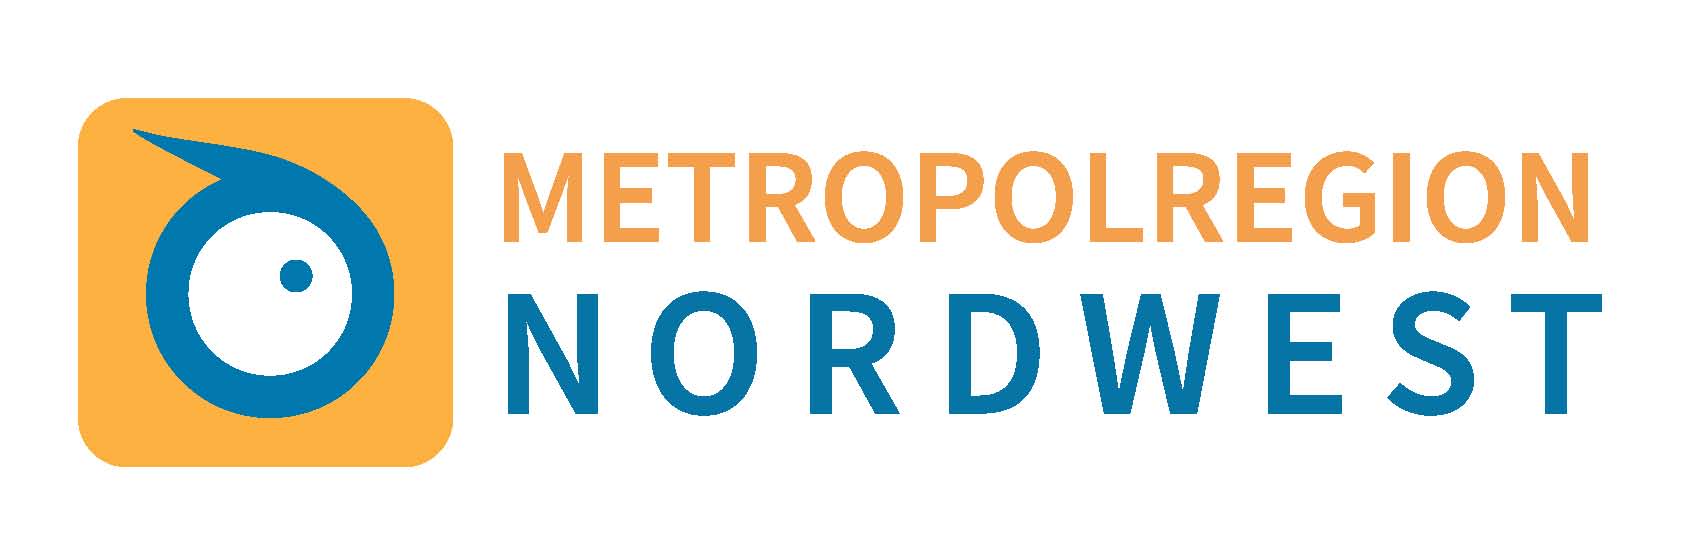 14 07 21 Logo Metropolregion Nordwest